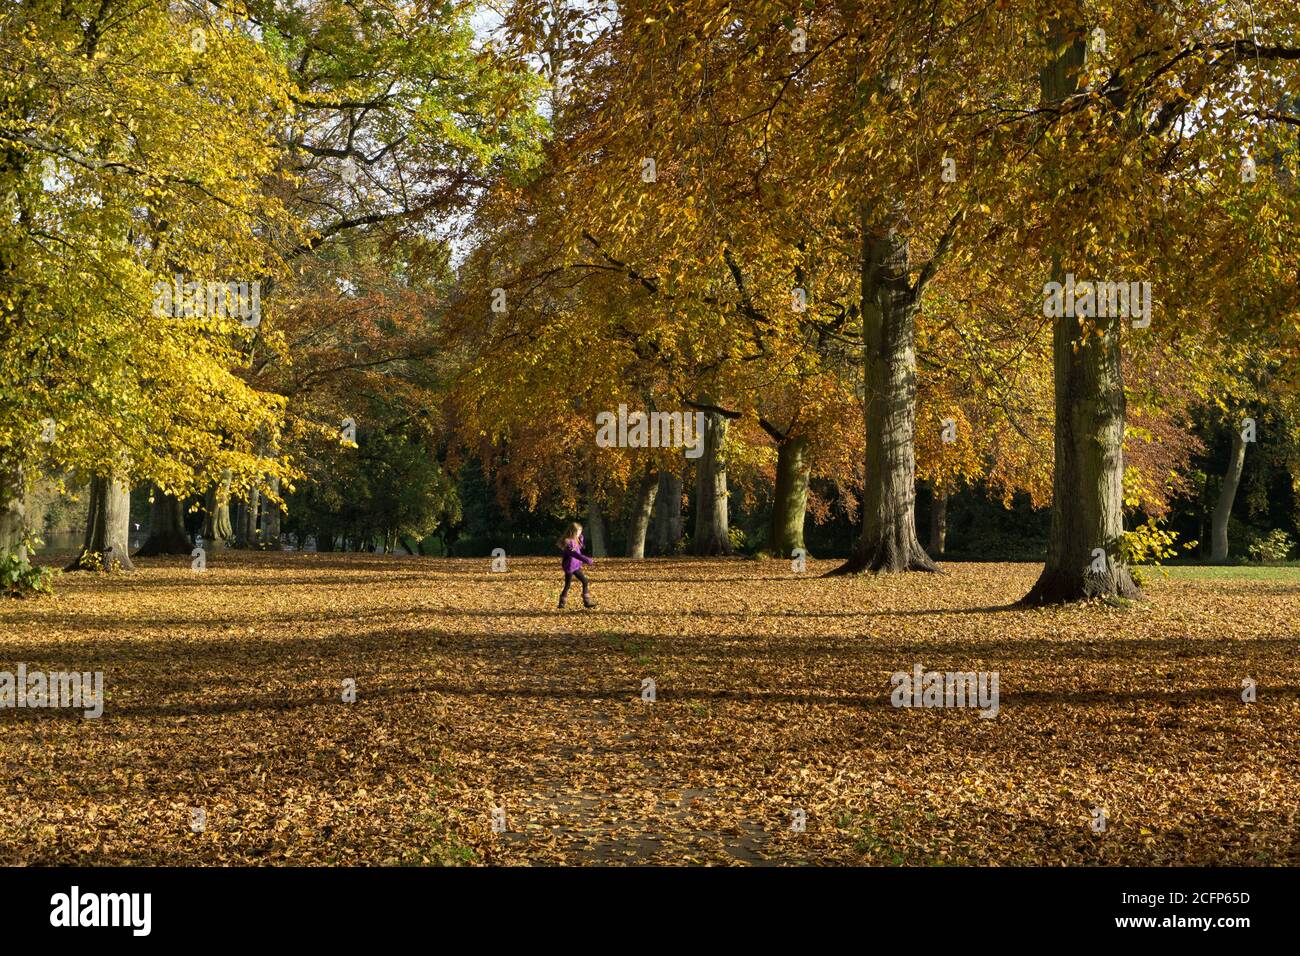 Path with Autumn trees and fallen leaves, Abington Park, Northampton, UK Stock Photo